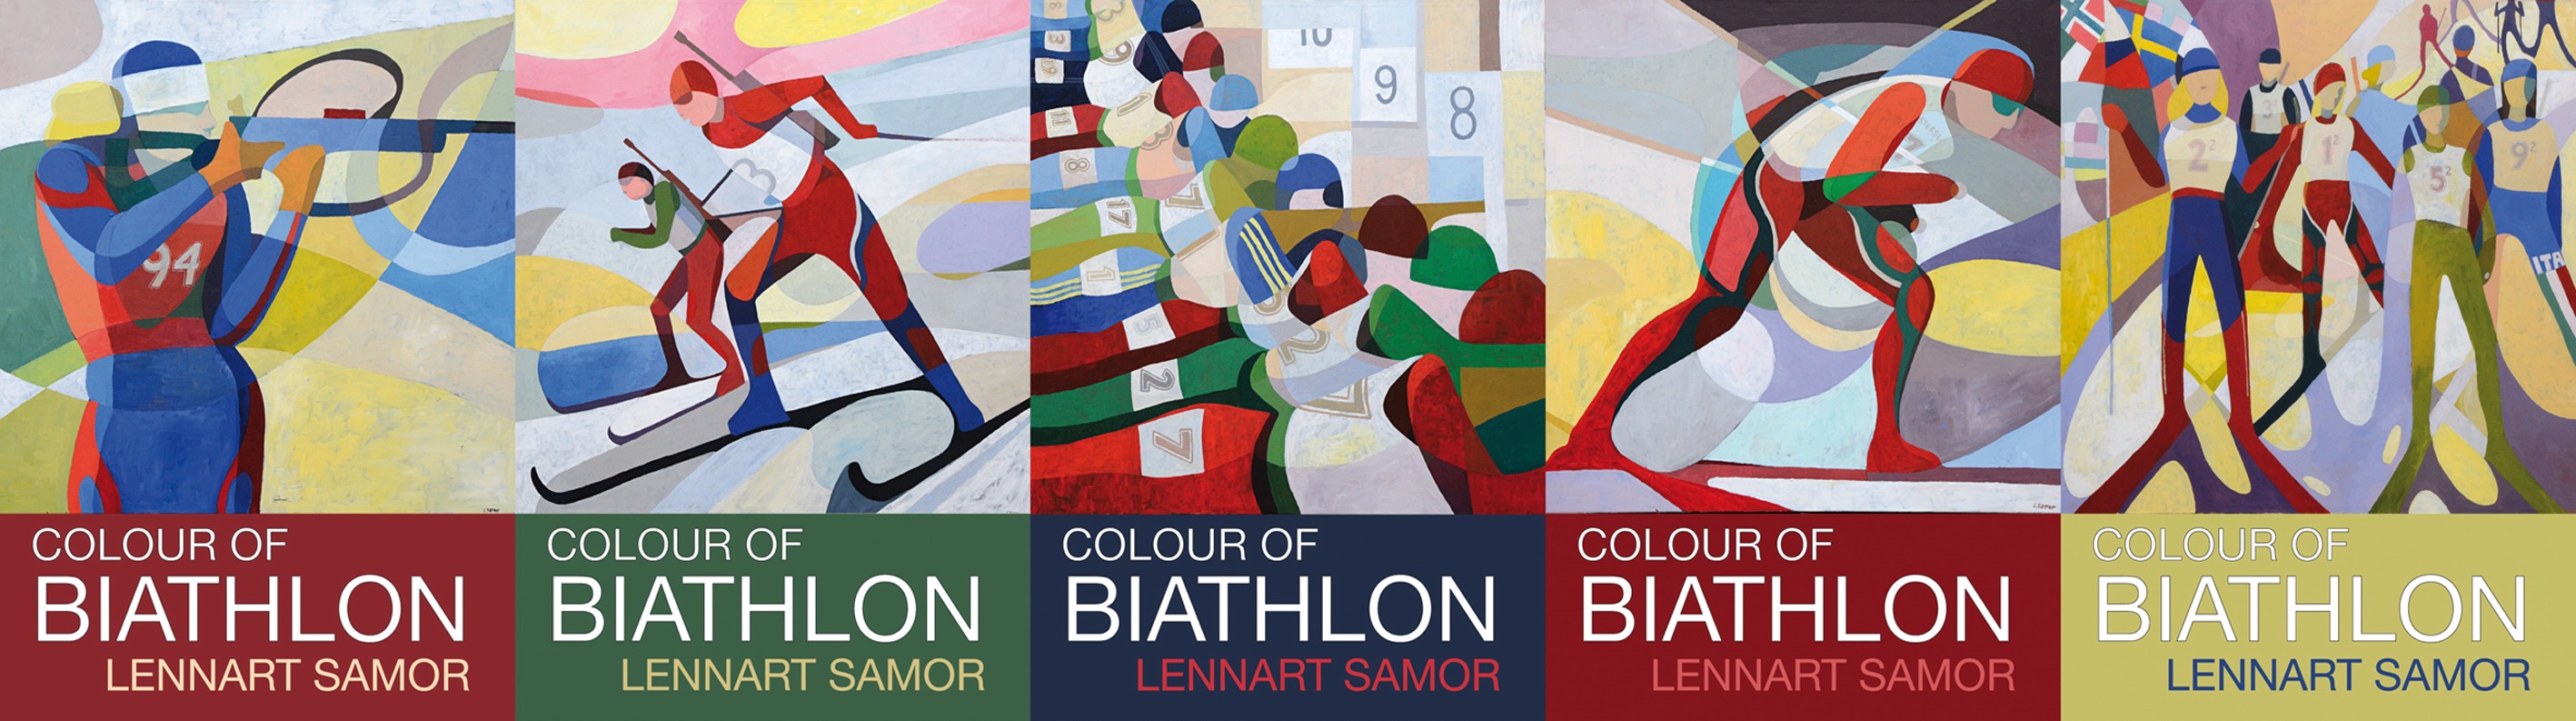 Print: Colour of biathlon 50x70x5ex = 800sek 